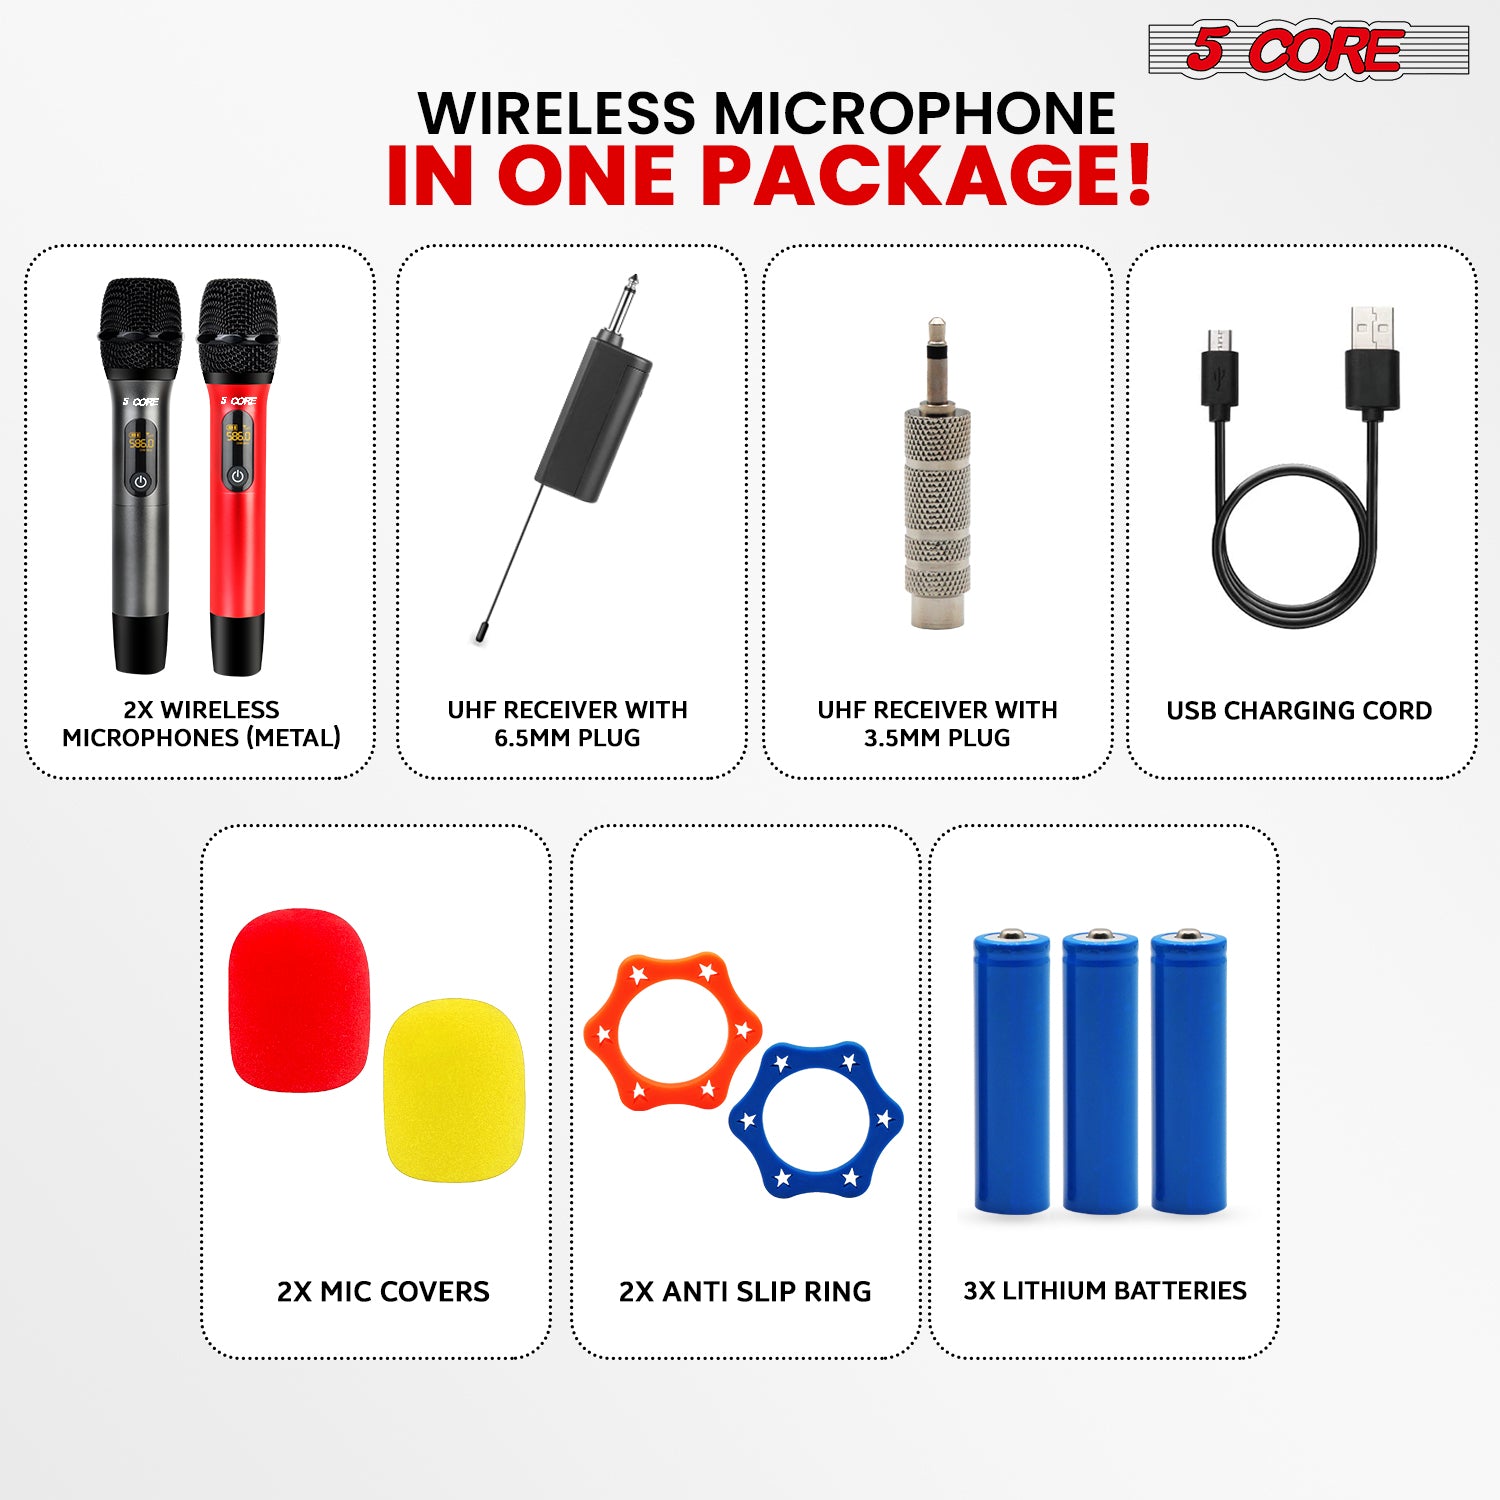 5 Core UHF Wireless Microphone • 210FT Max Range • Karaoke Dynamic Metal Mic • Cardioid Pickup